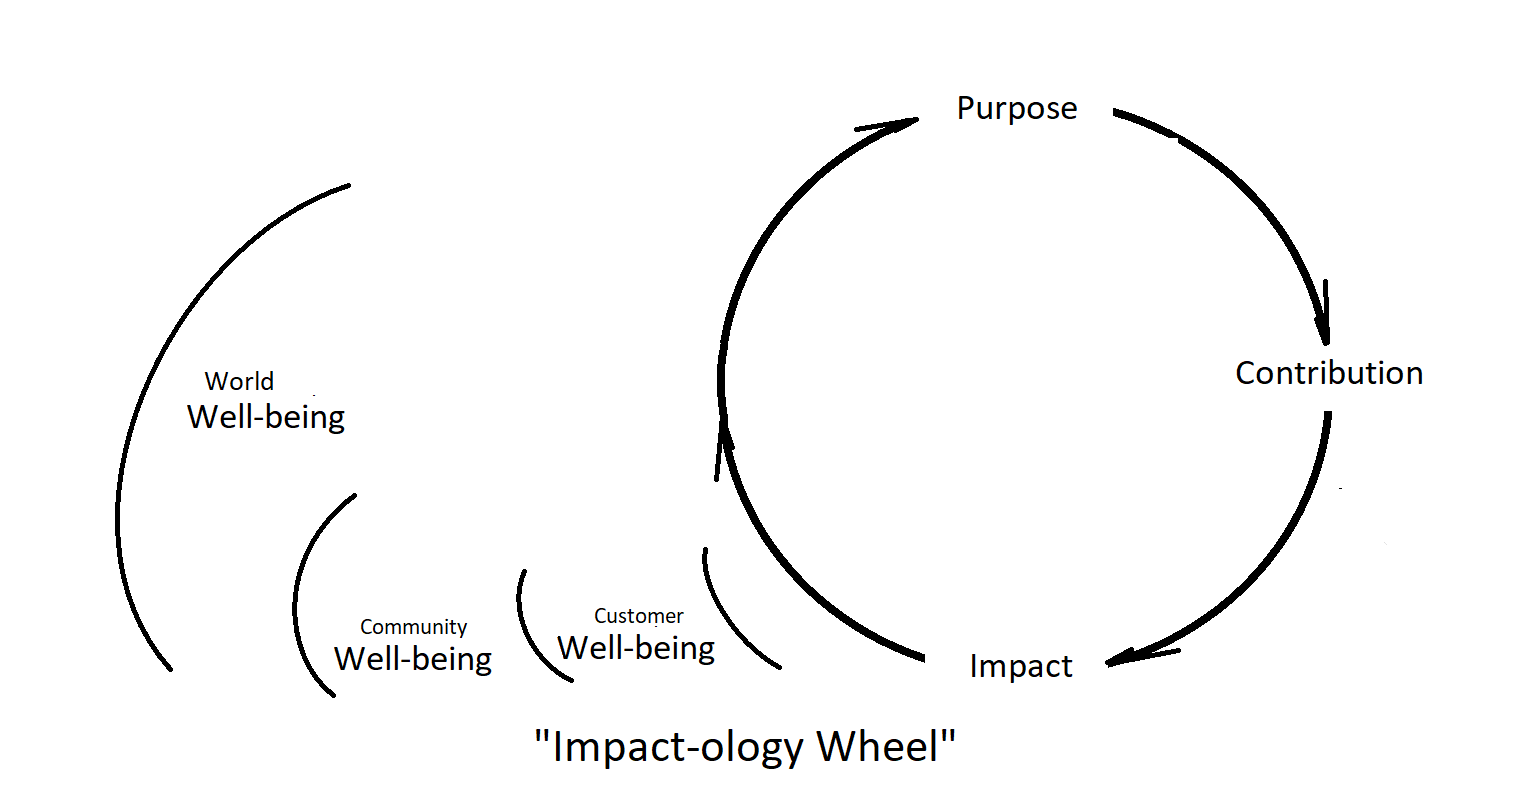 Impact-ology Wheel - outside view